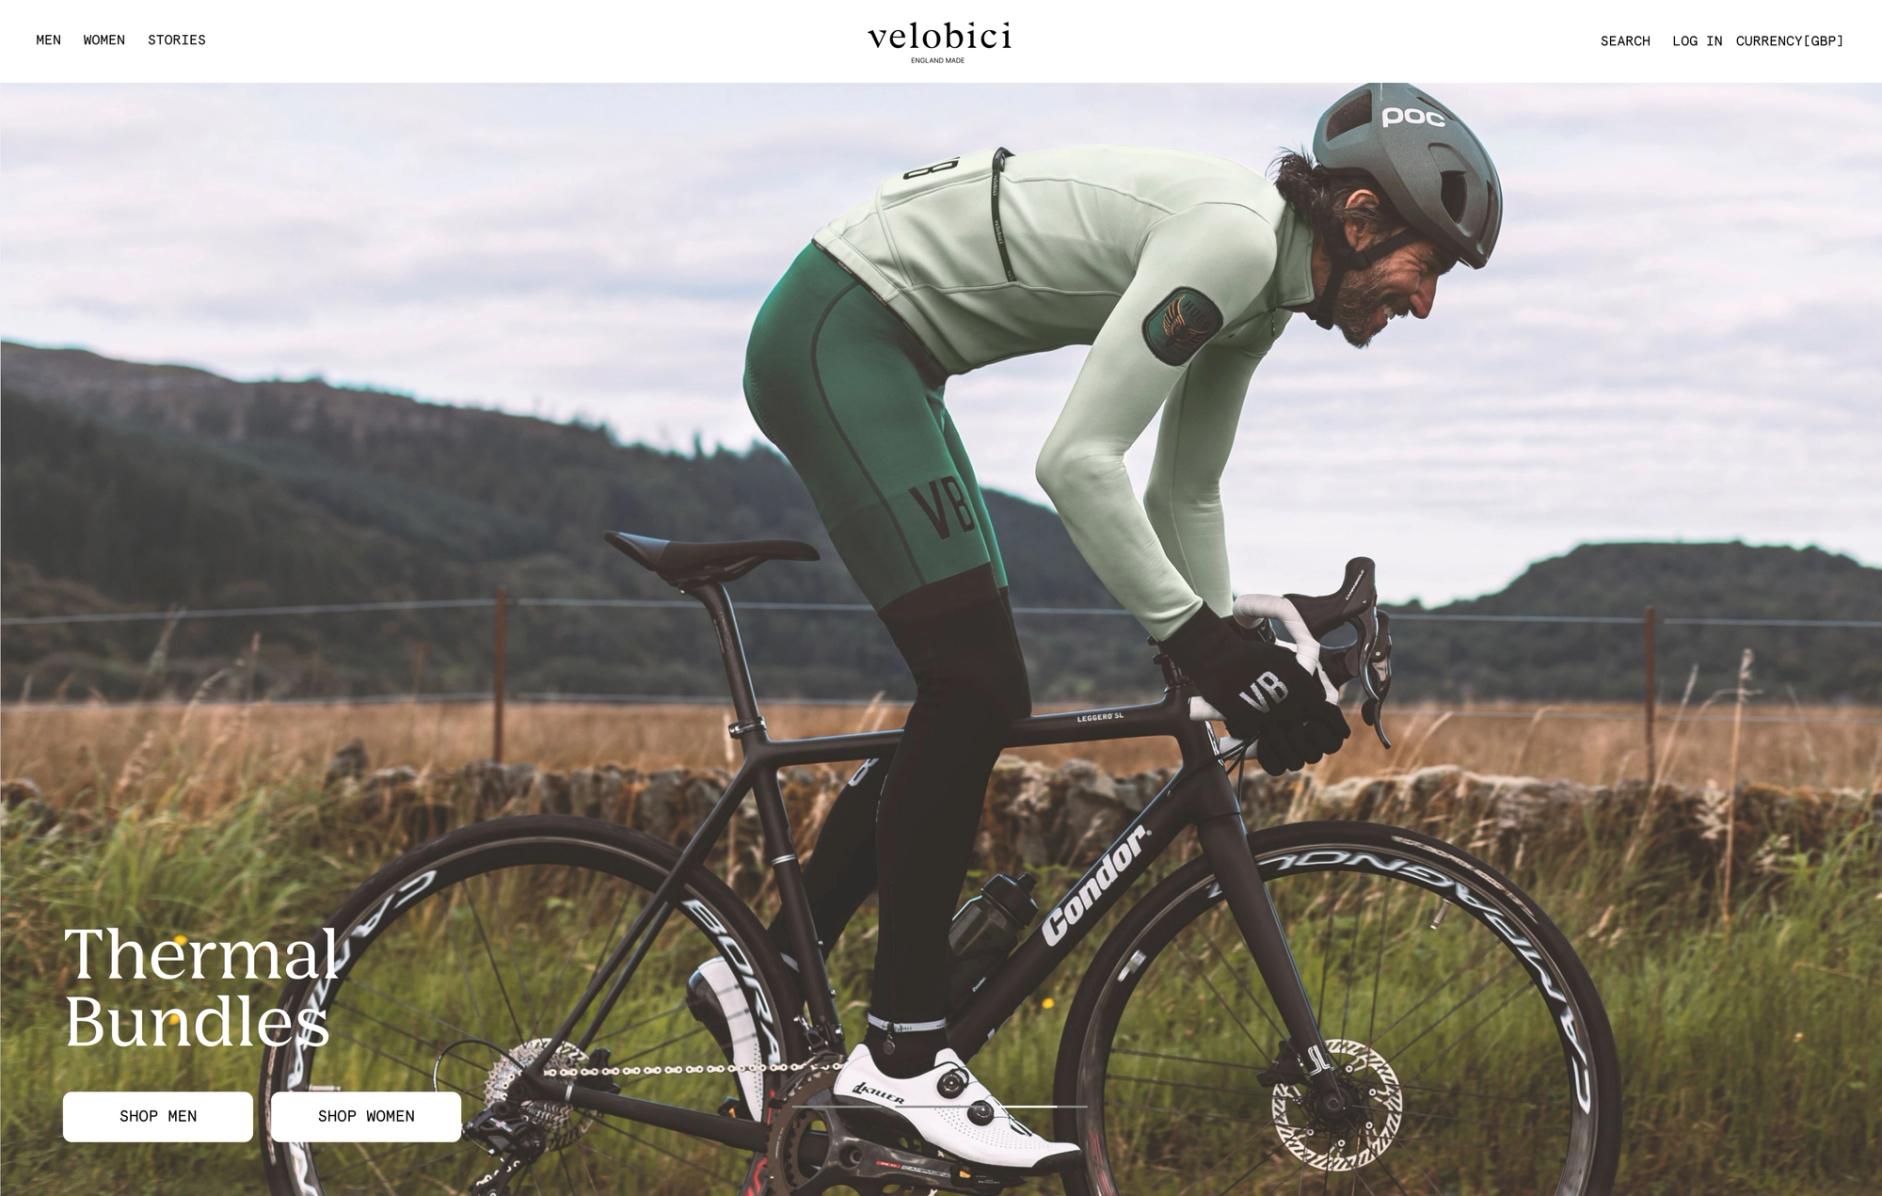 Velobici luxury cycling apparel